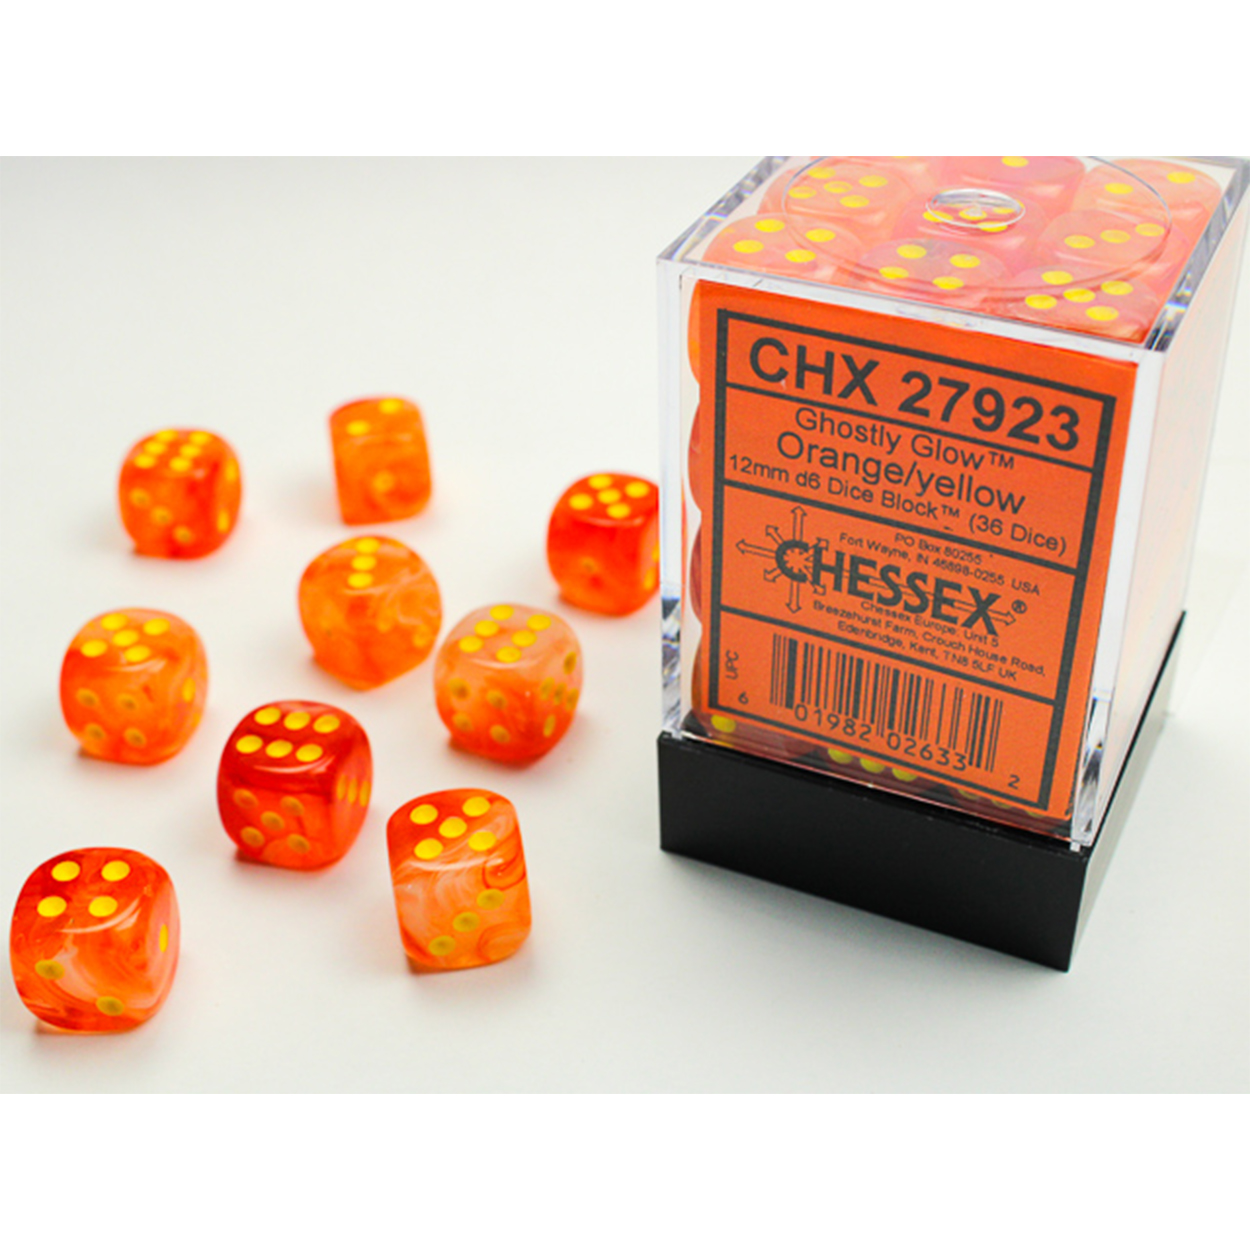 تاس بازی چسکس مدل Ghostly Glow کد CHX 27923 بسته 2 عددی -  - 8